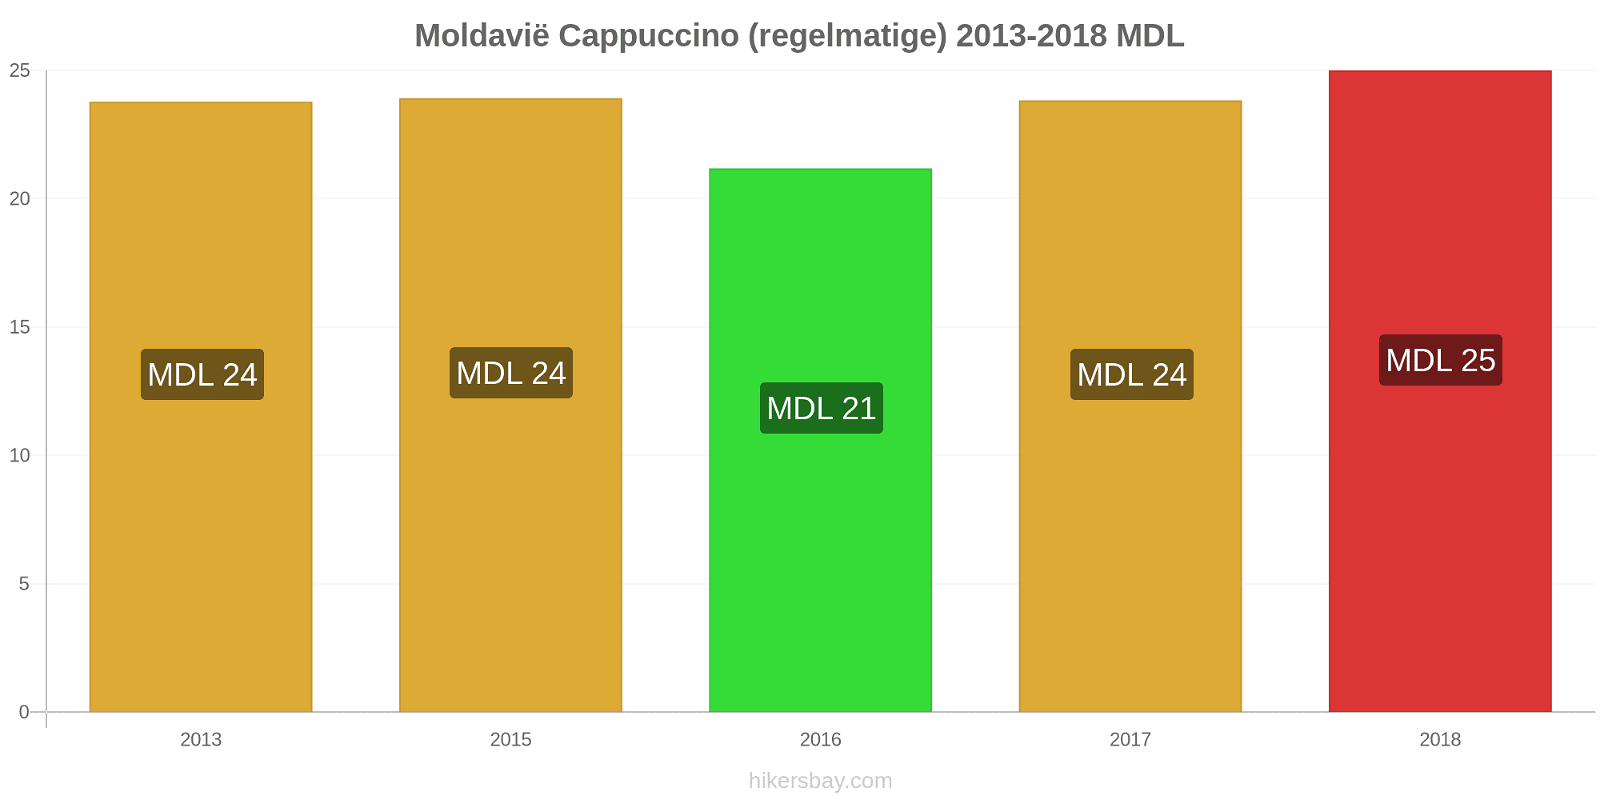 Moldavië prijswijzigingen Cappuccino hikersbay.com